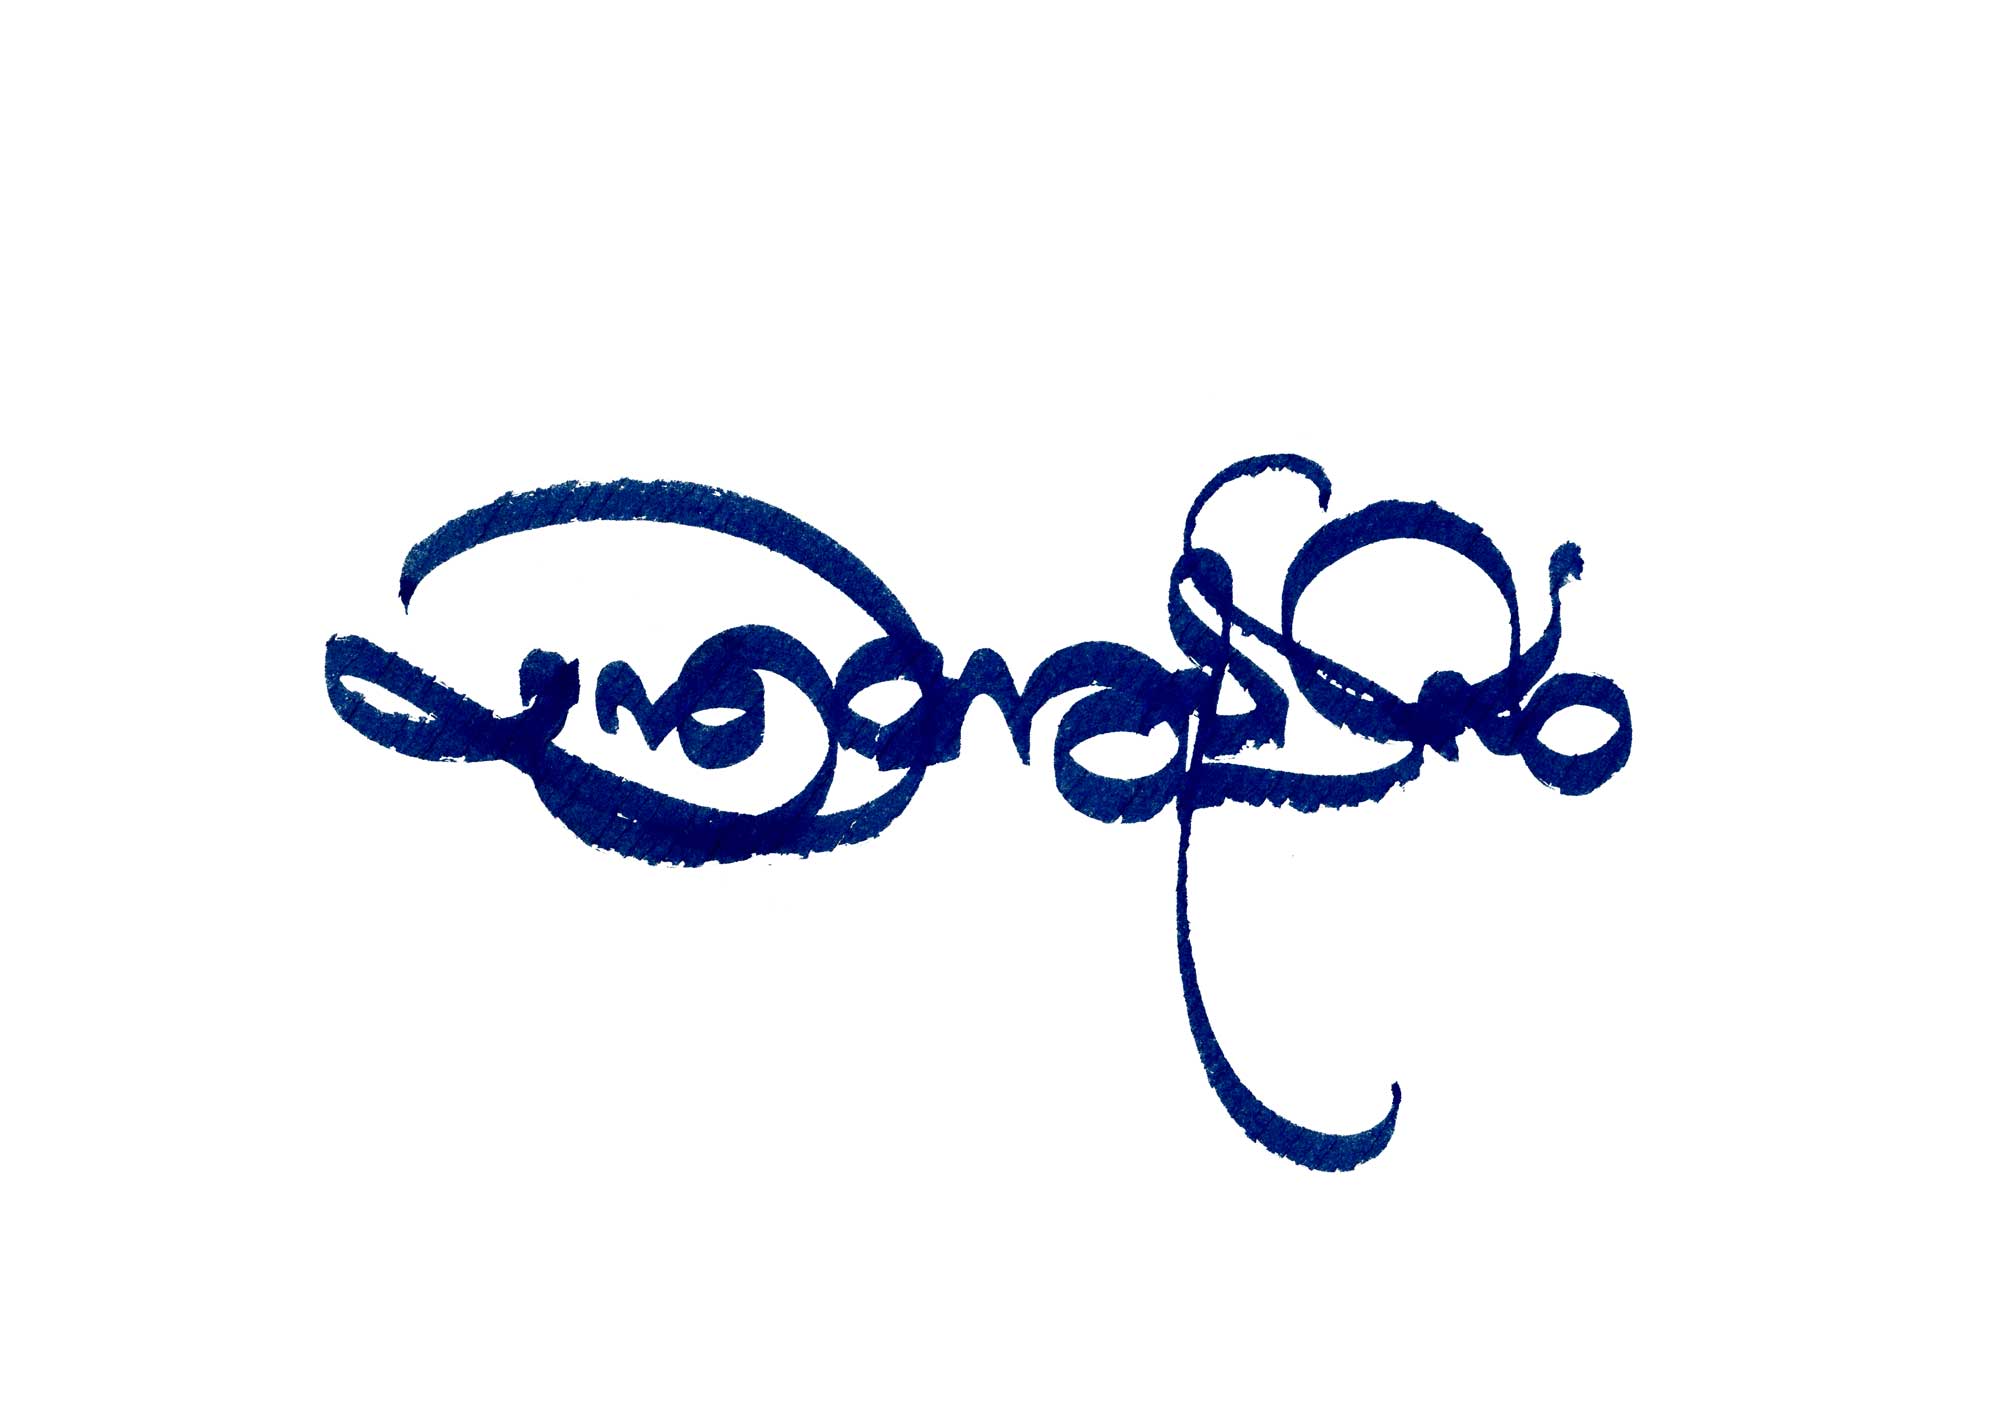 malayalam-calligraphy-02.jpg